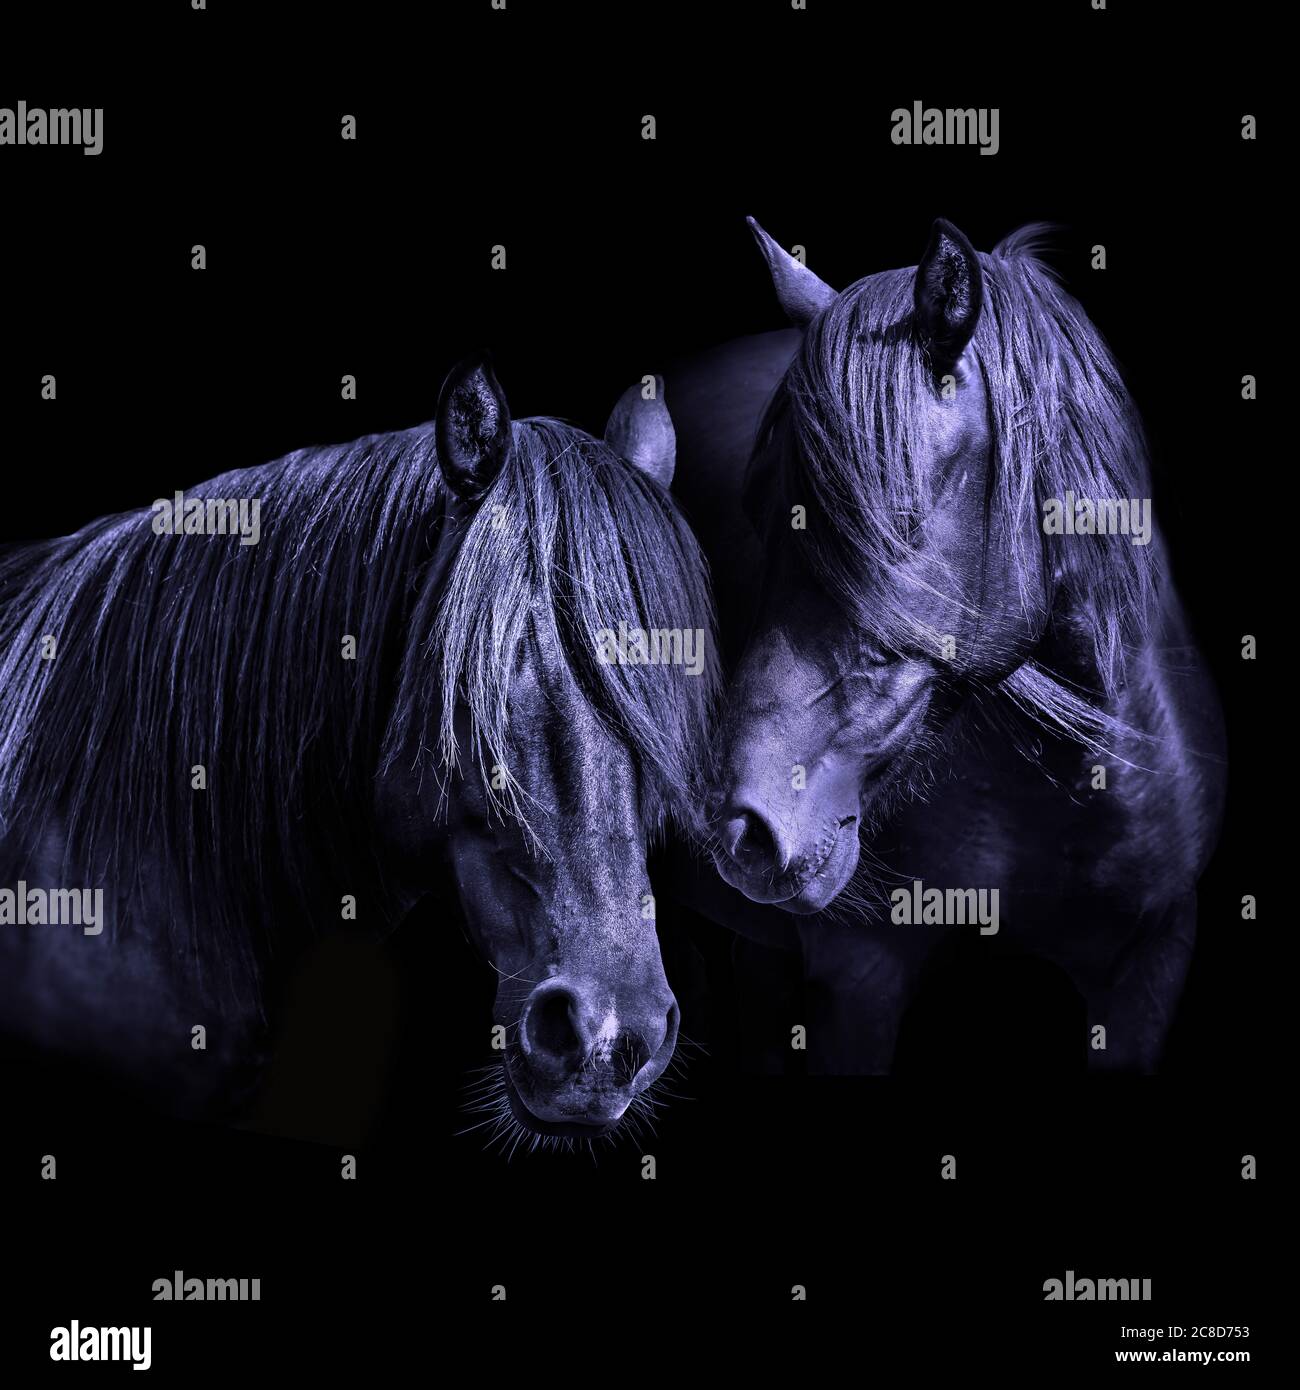 Black horse pony stallion head equine portrait Stock Photo